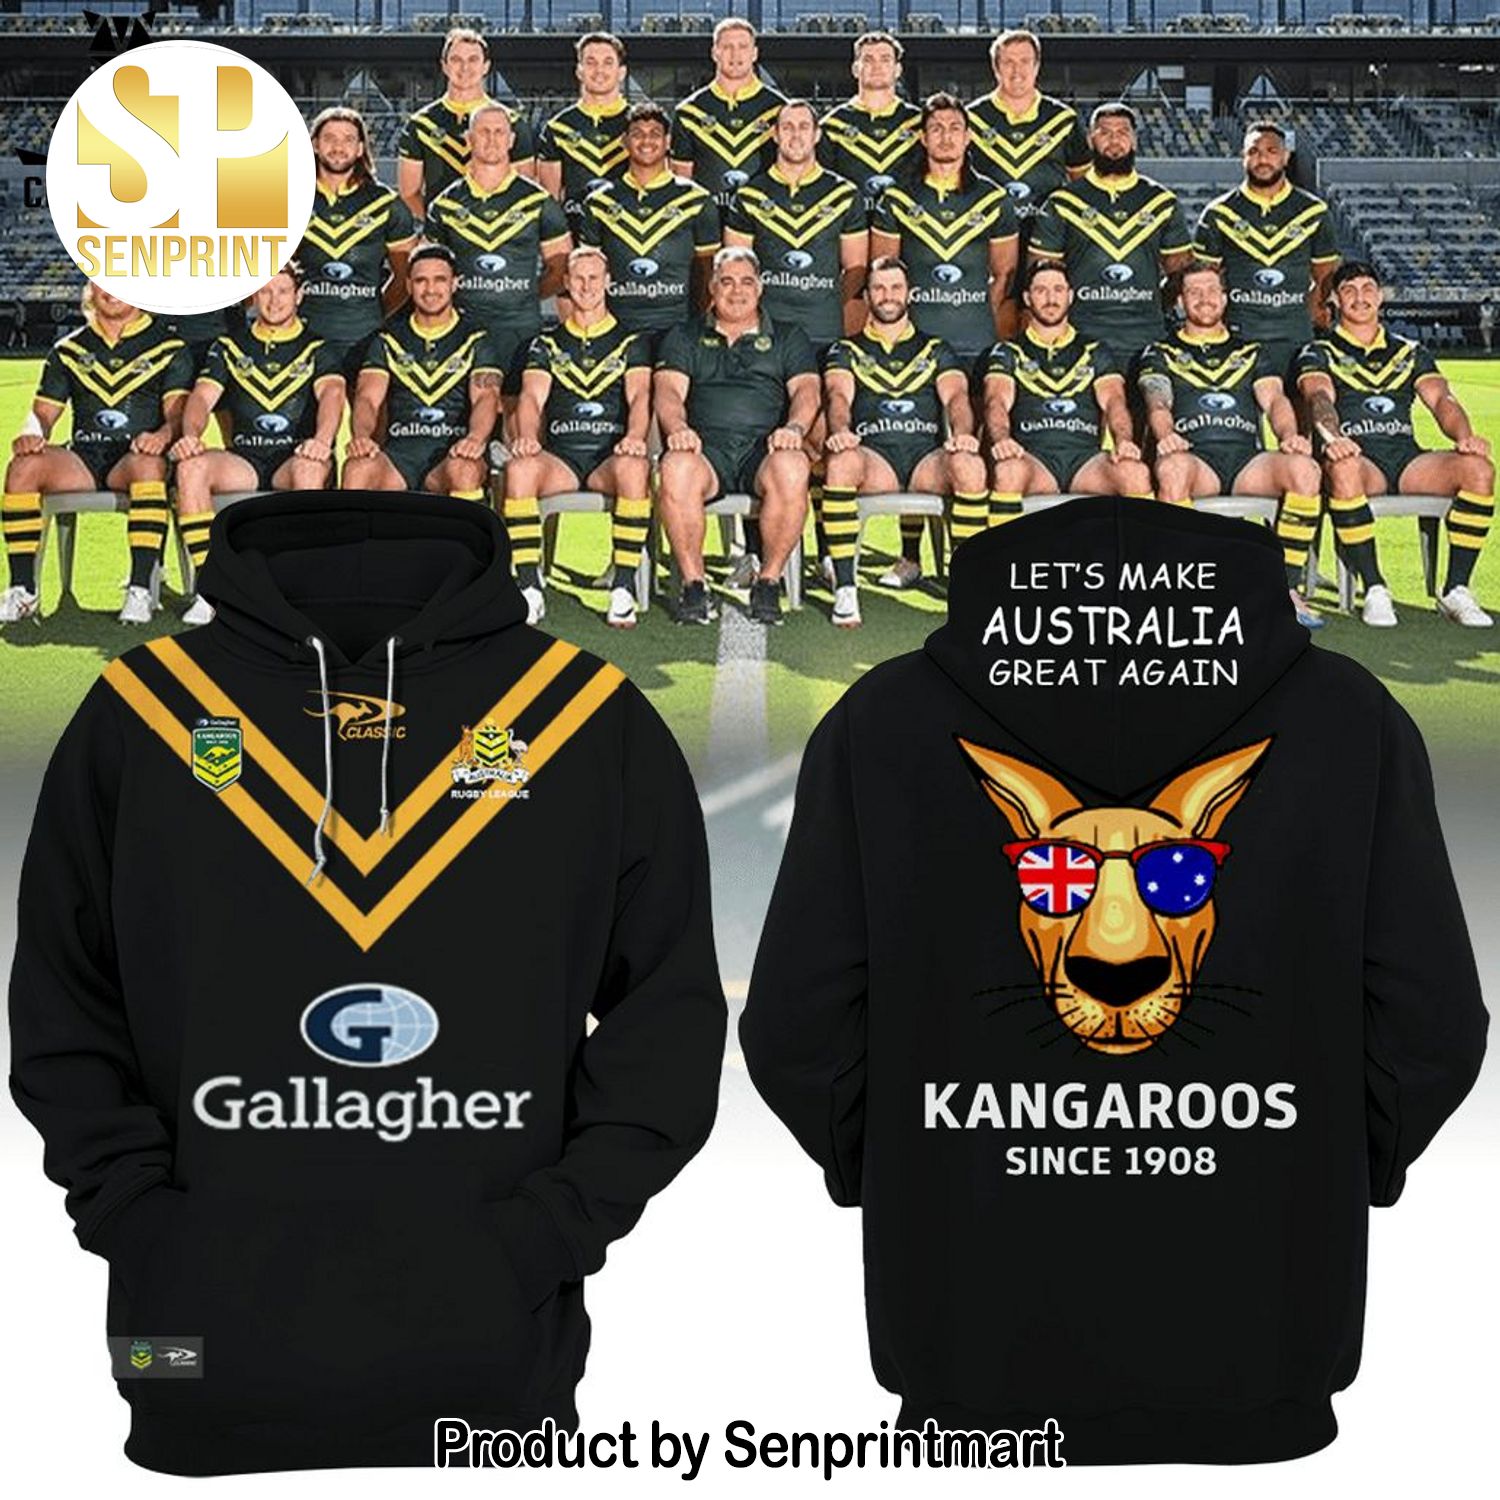 Australian Kangaroos Since 1908 Pacific Rugby League Championships Black Design Full Print Shirt